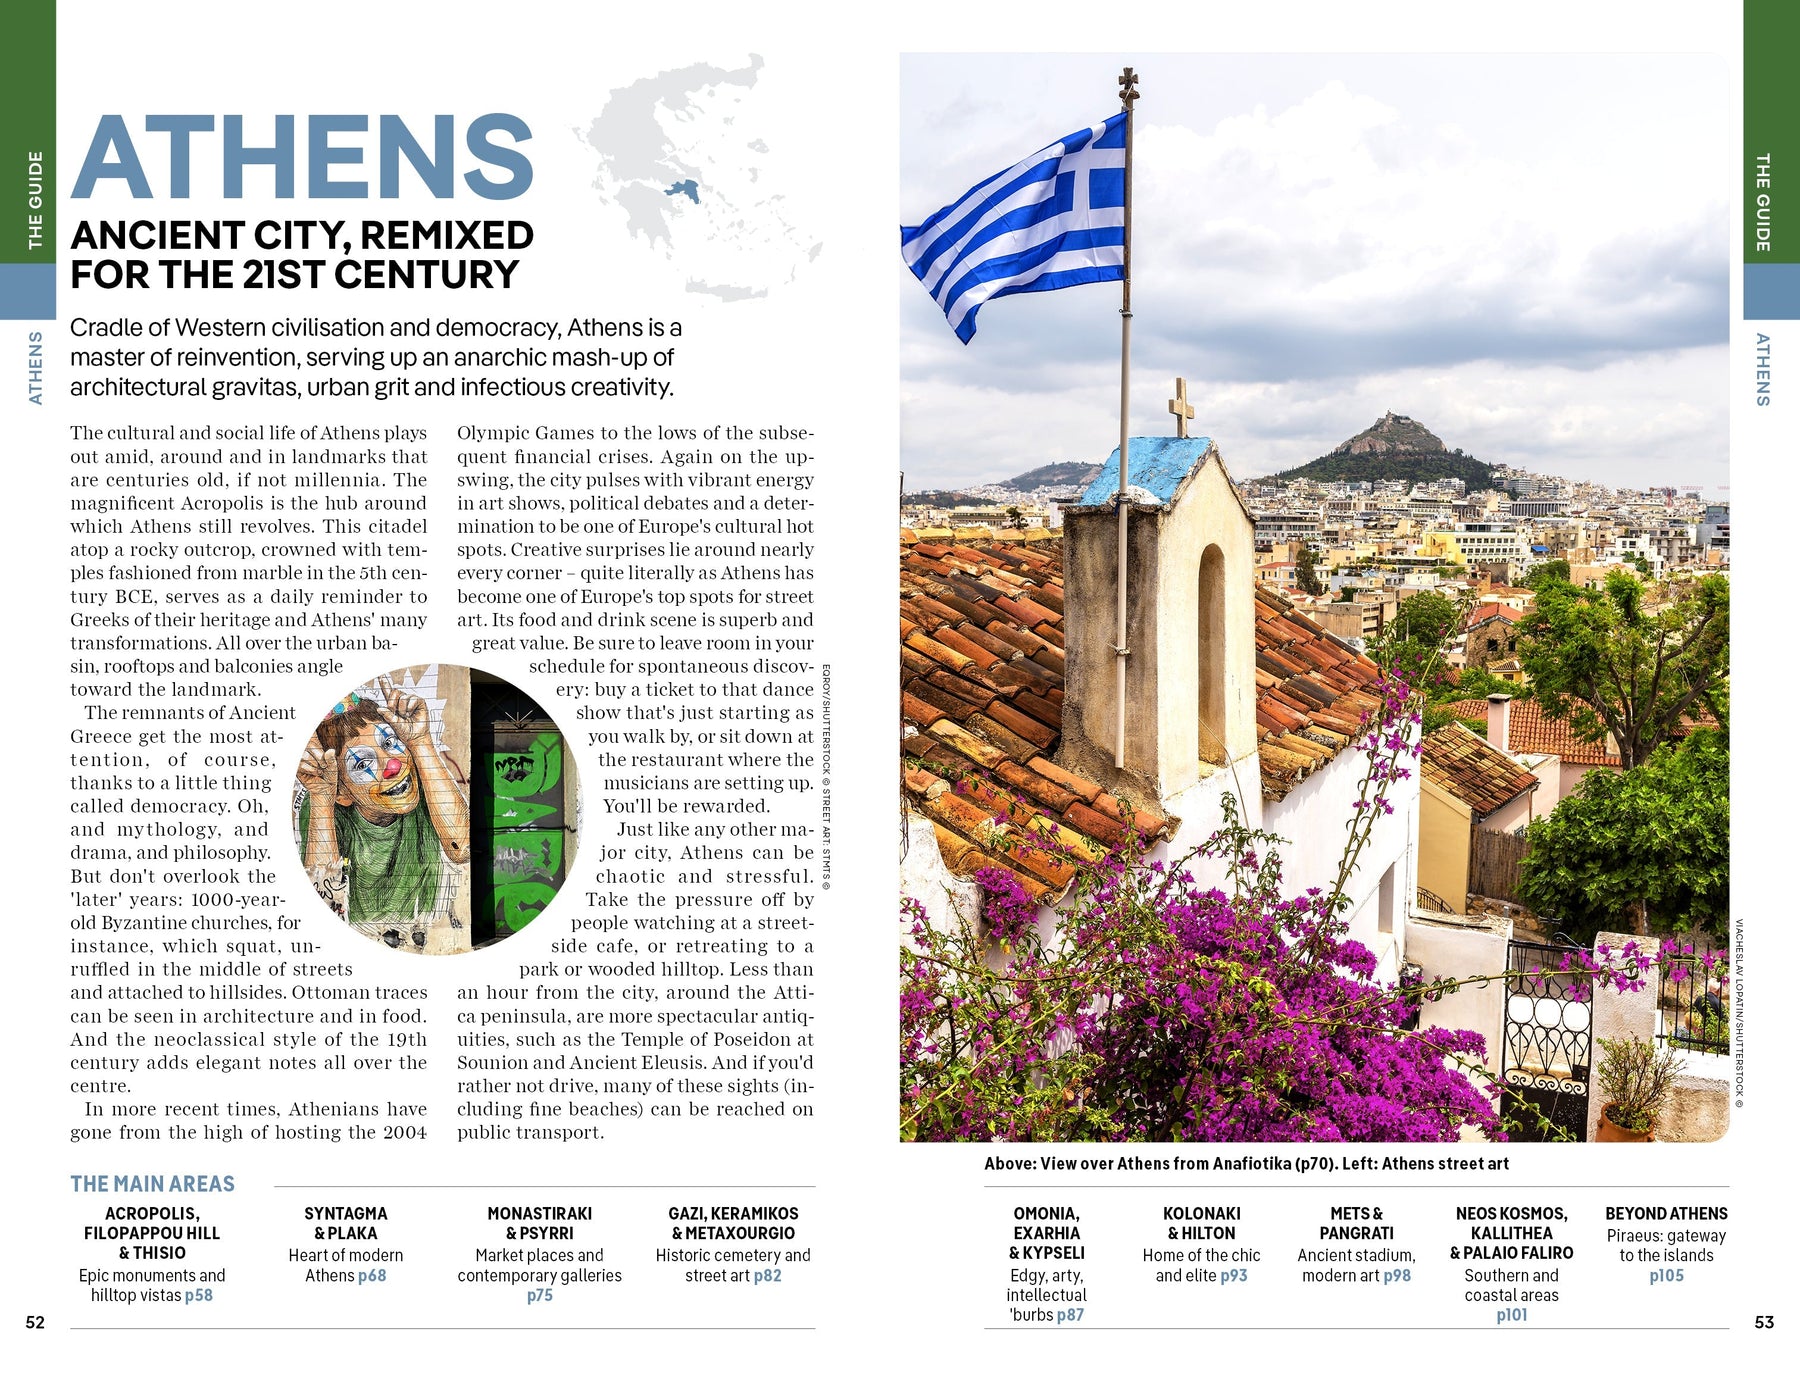 Greece - Book